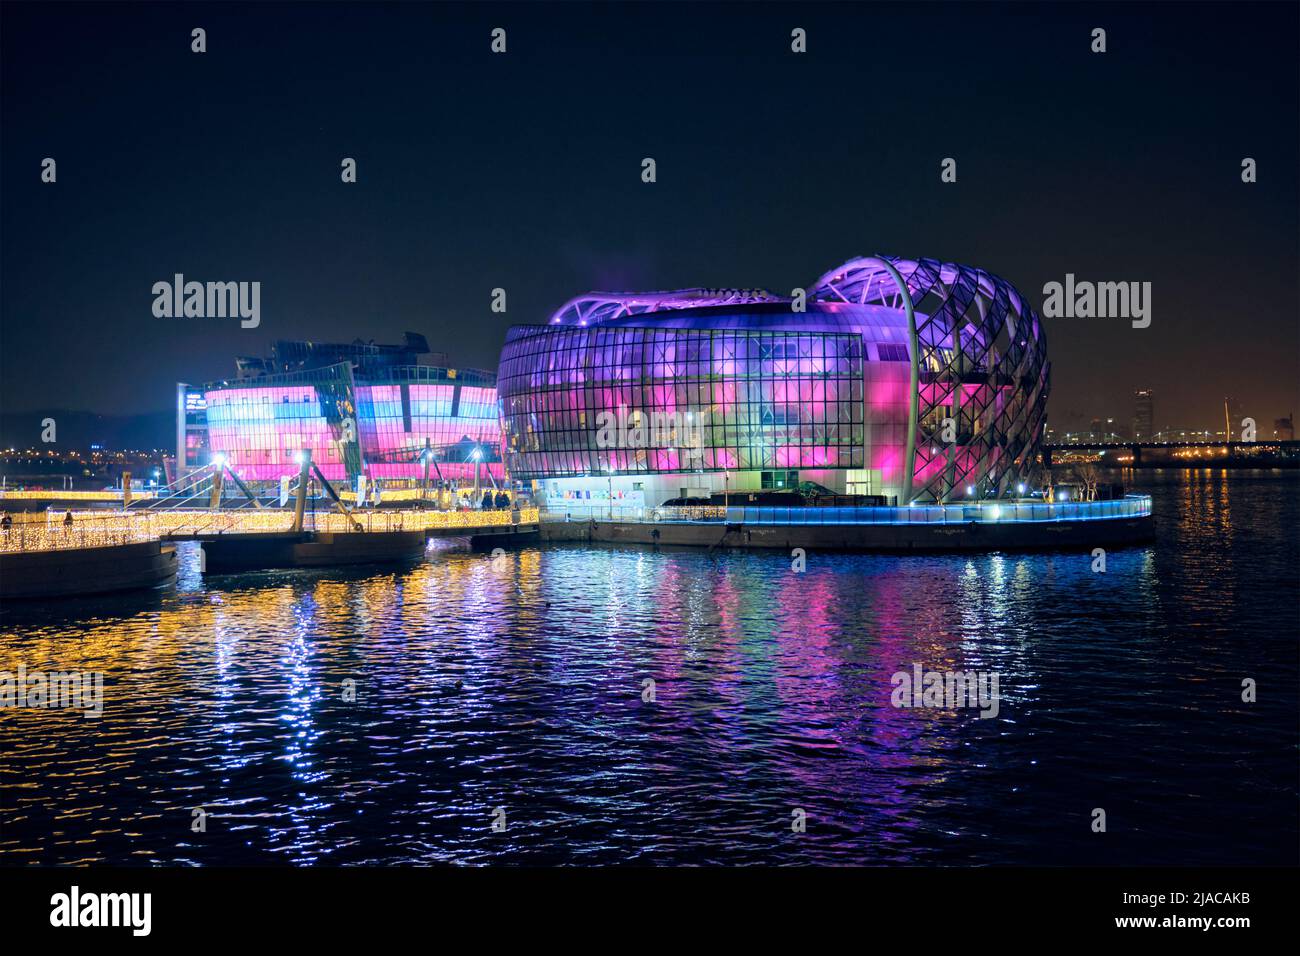 Some Sevit buildings on artificial floating islands located near the Banpo Bridge illuminated at night, Seoul, South Korea Stock Photo